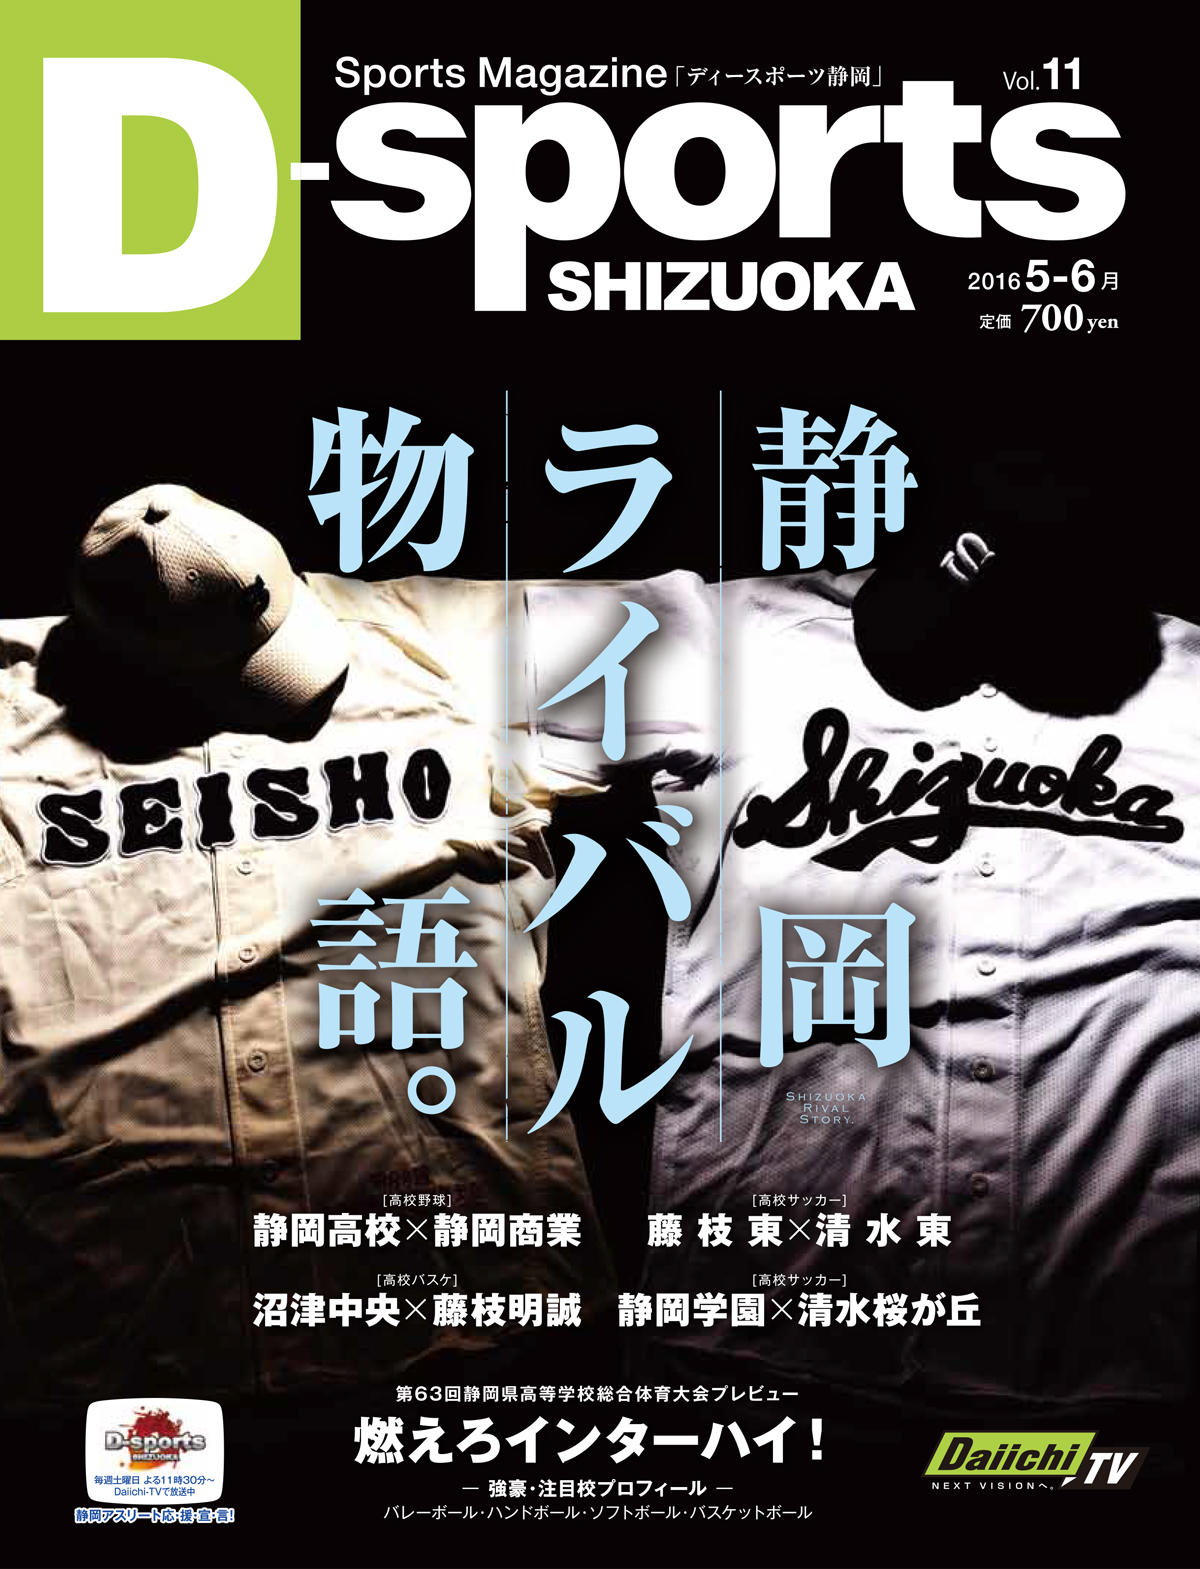 http://d-sports.shizuokastandard.jp/article/2016/v11_h1.jpg